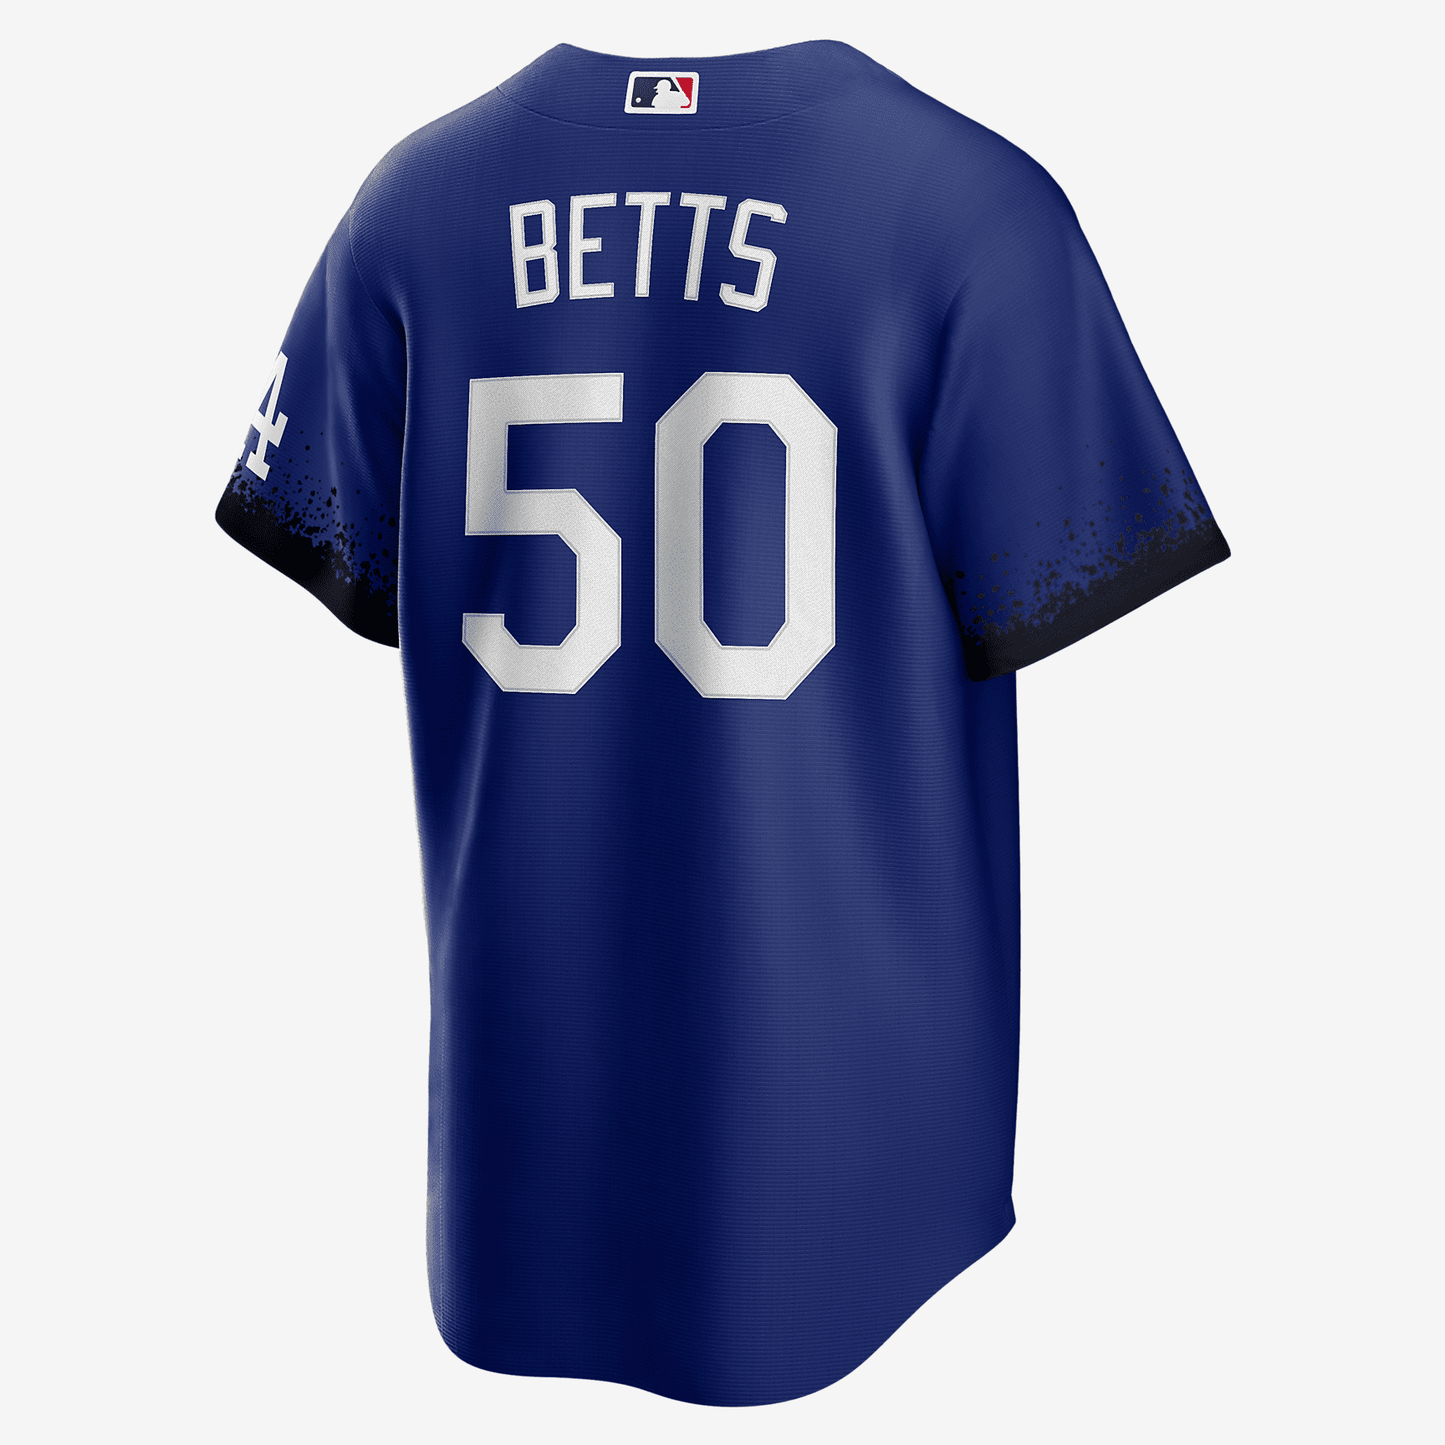 MLB Los Angeles Dodgers City Connect (Mookie Betts) Men's T-Shirt.